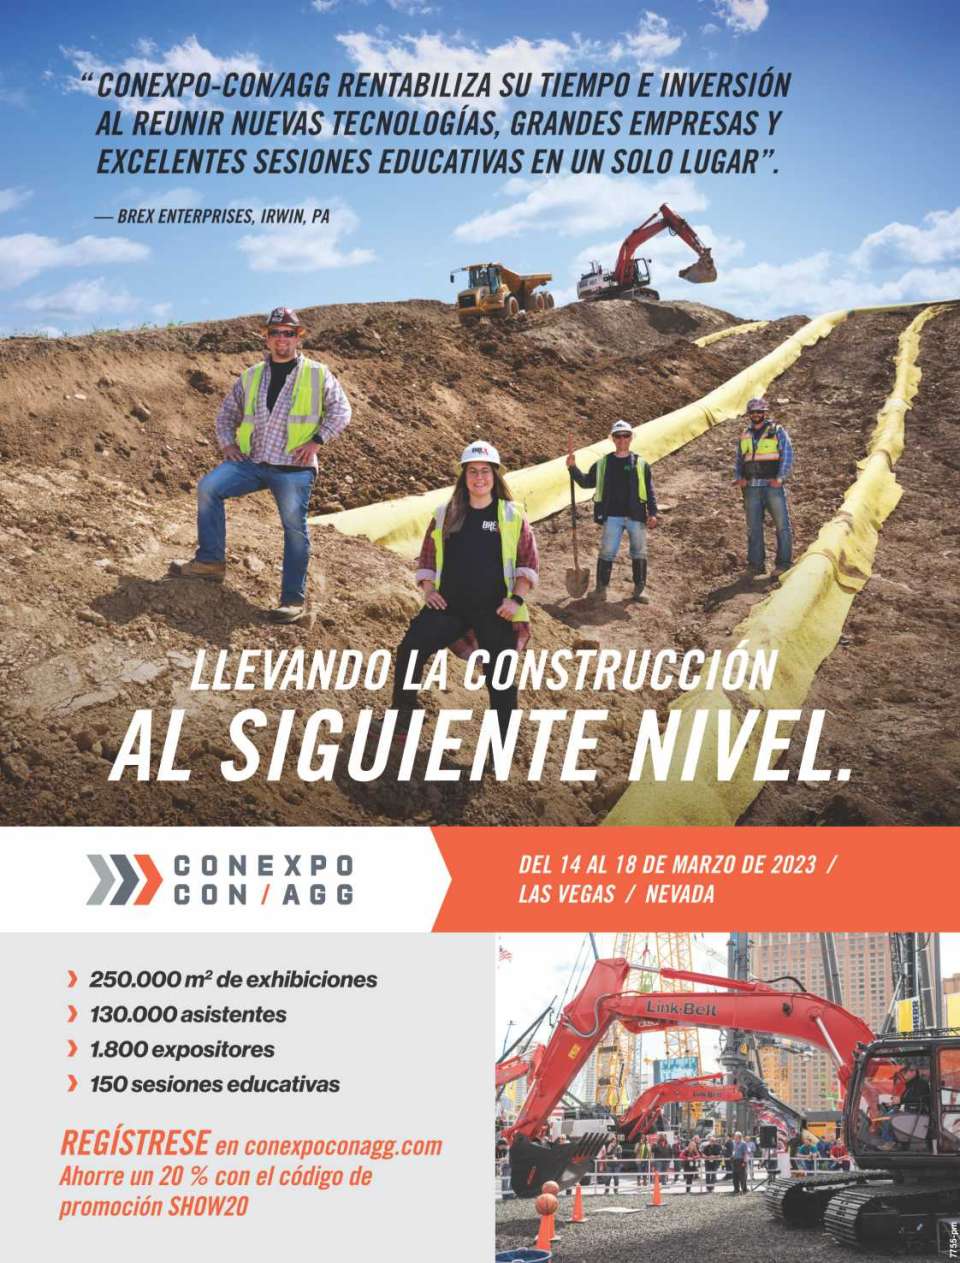 CONEXPO-CON/AGG 2023. North America Largest Construction Trade Show, March 14-18, 2023 in Las Vegas, Nevada